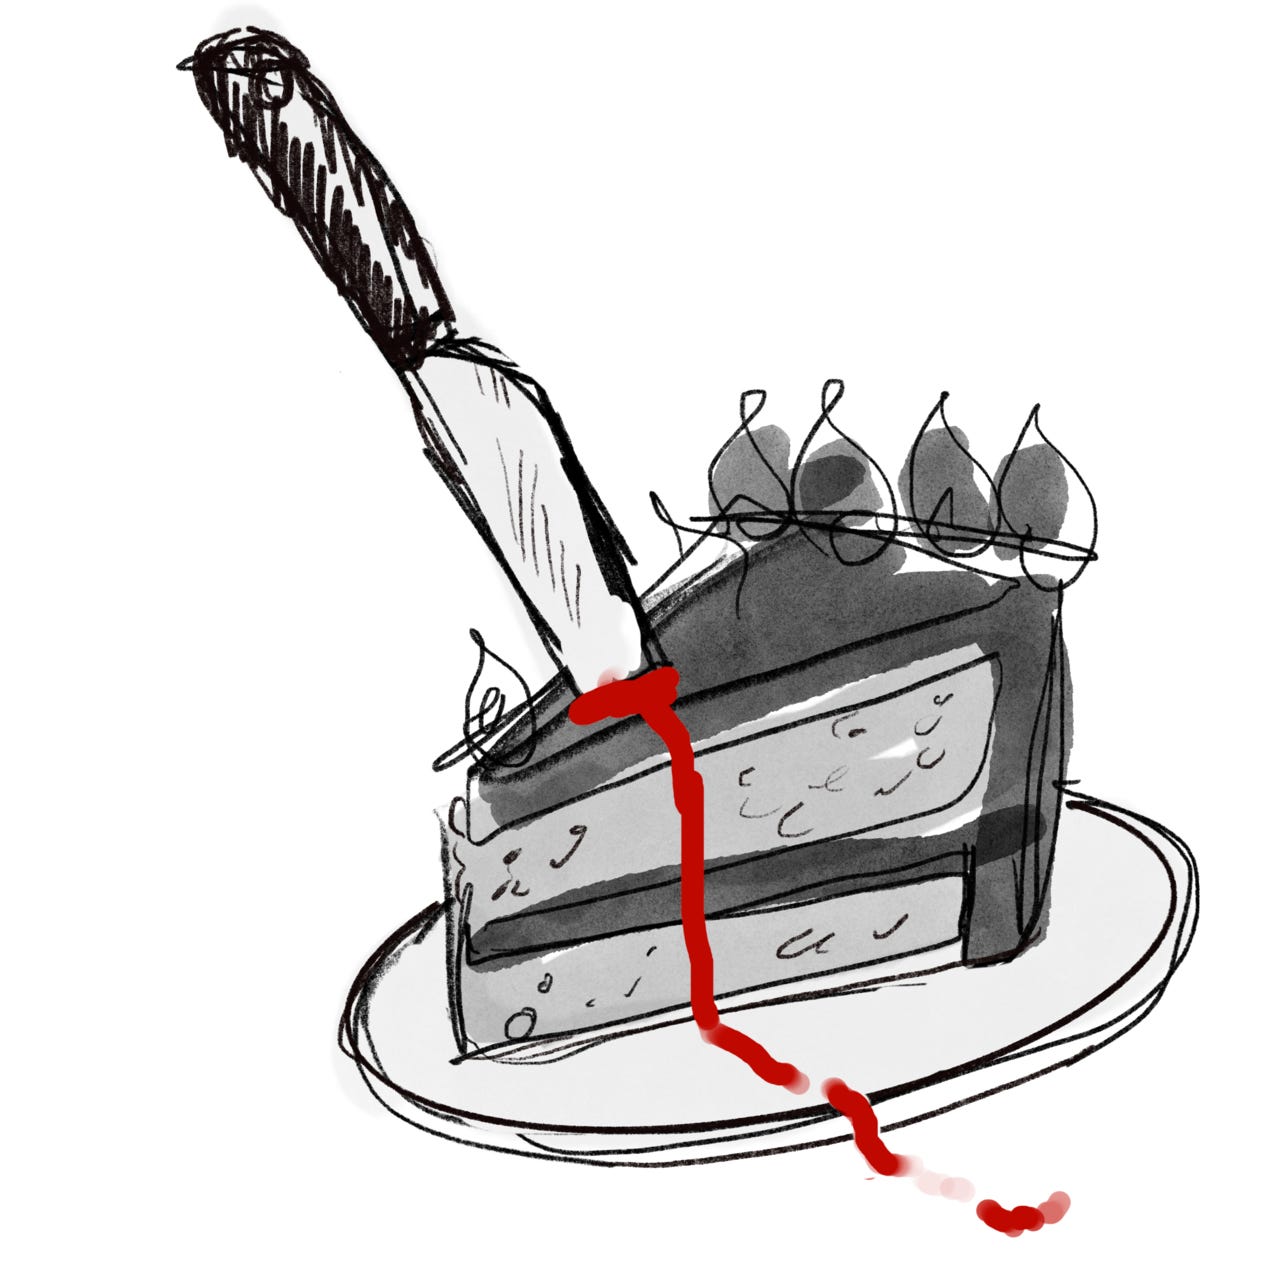 Artwork for let them eat cake